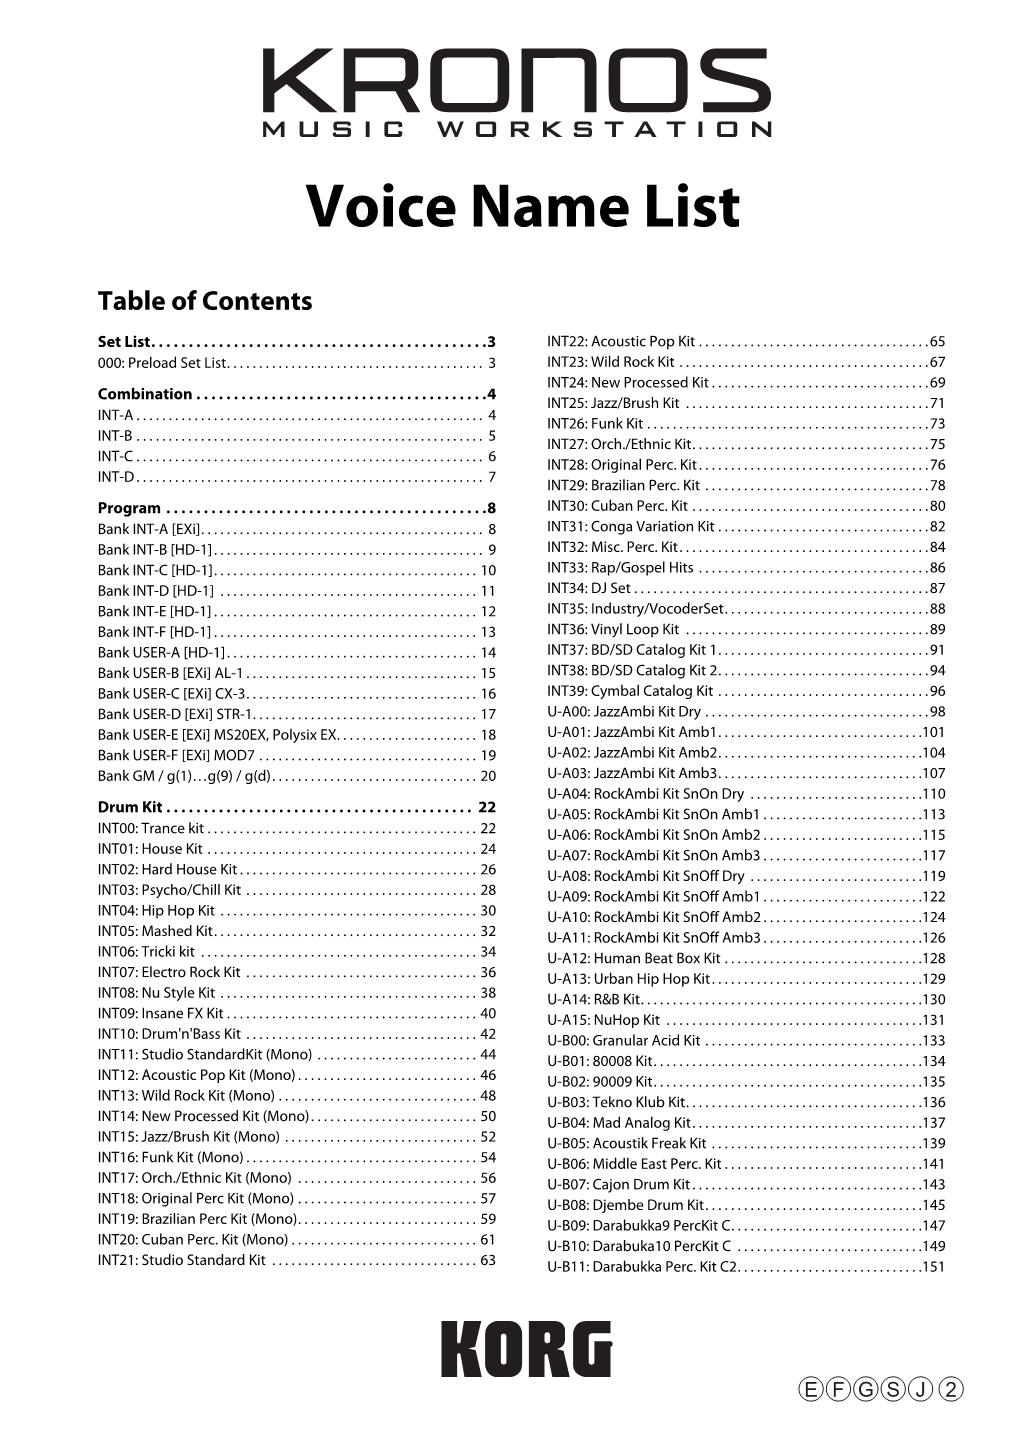 KRONOS Voice Name List